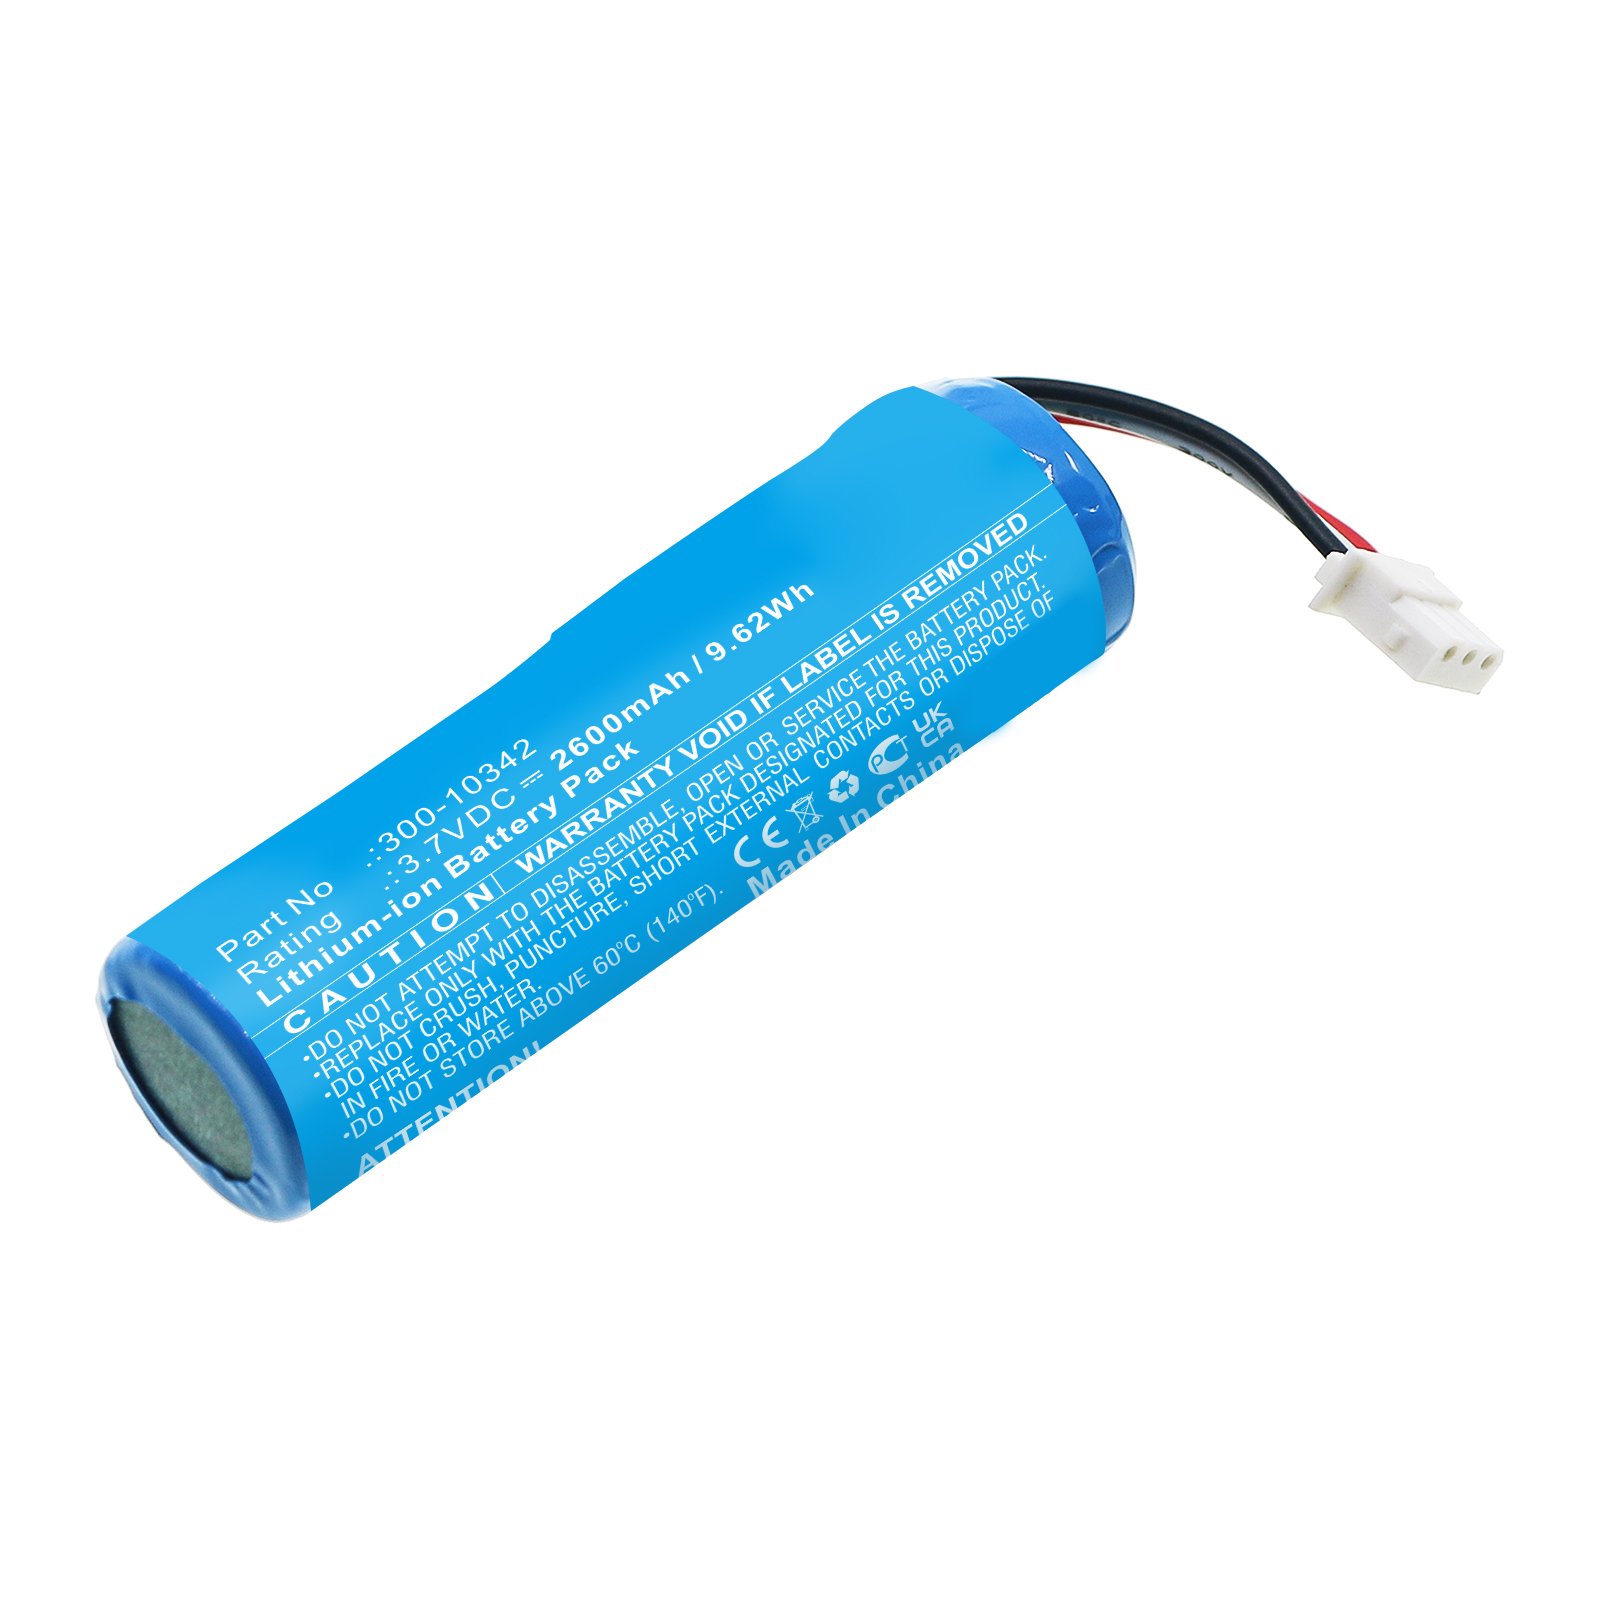 Batteries for HoneywellAlarm System